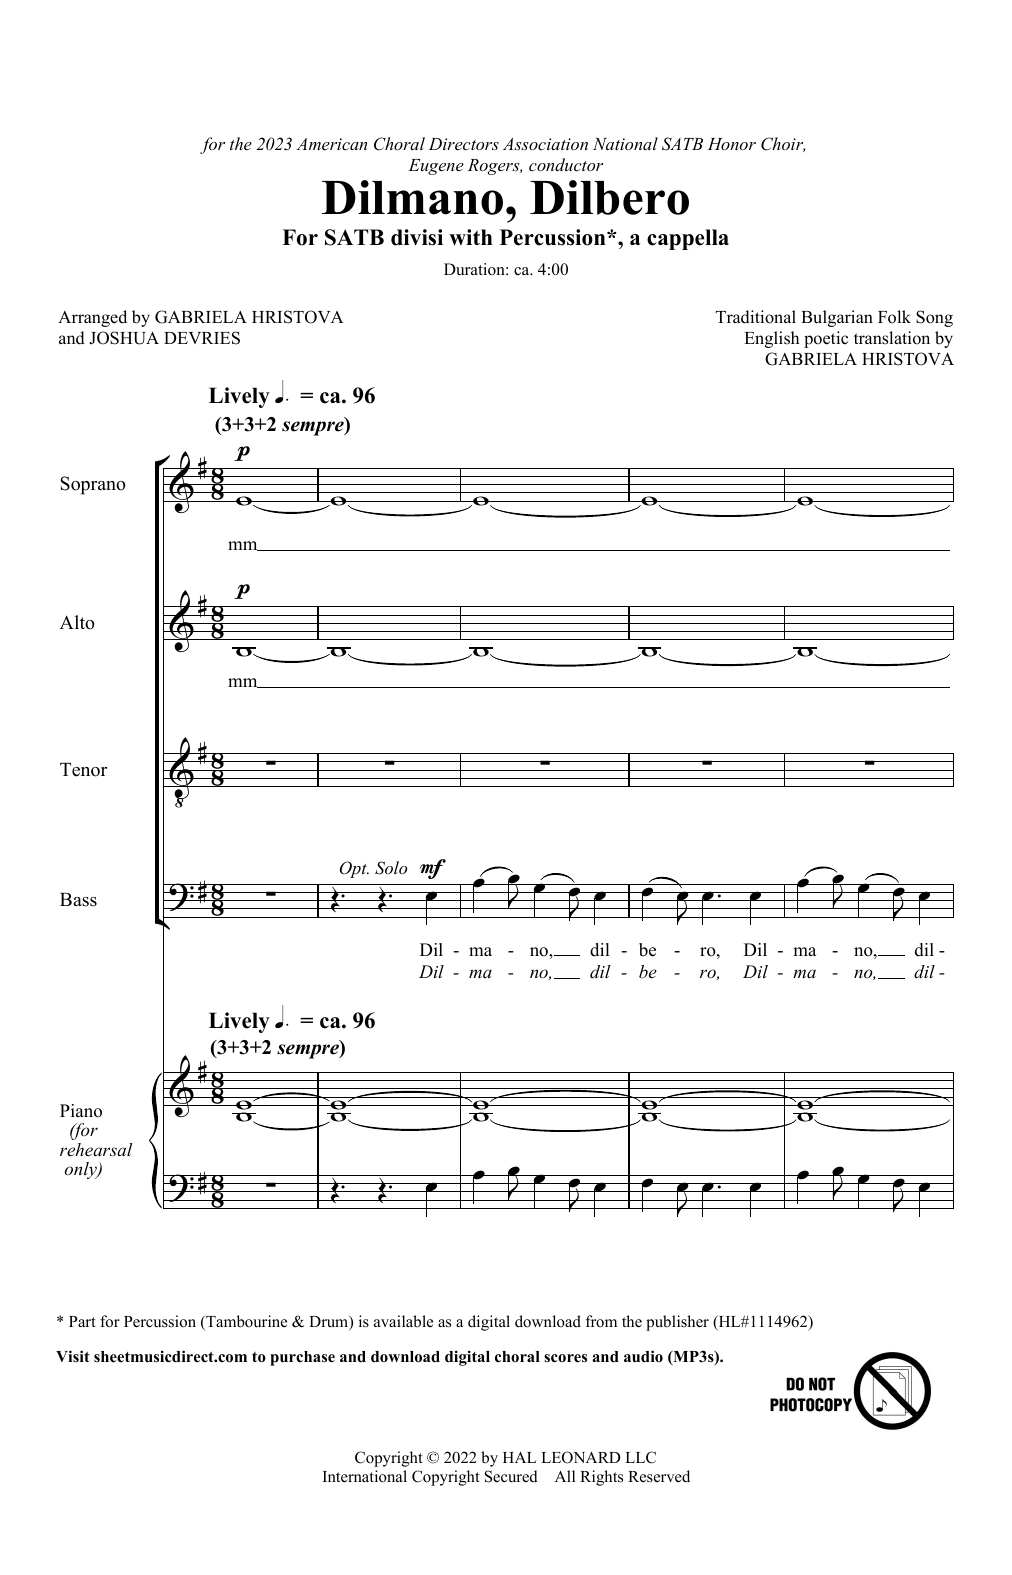 Traditional Bulgarian Folk Song Dilmano, Dilbero (arr. Gabriela Hristova & Joshua DeVries) Sheet Music Notes & Chords for Choir - Download or Print PDF